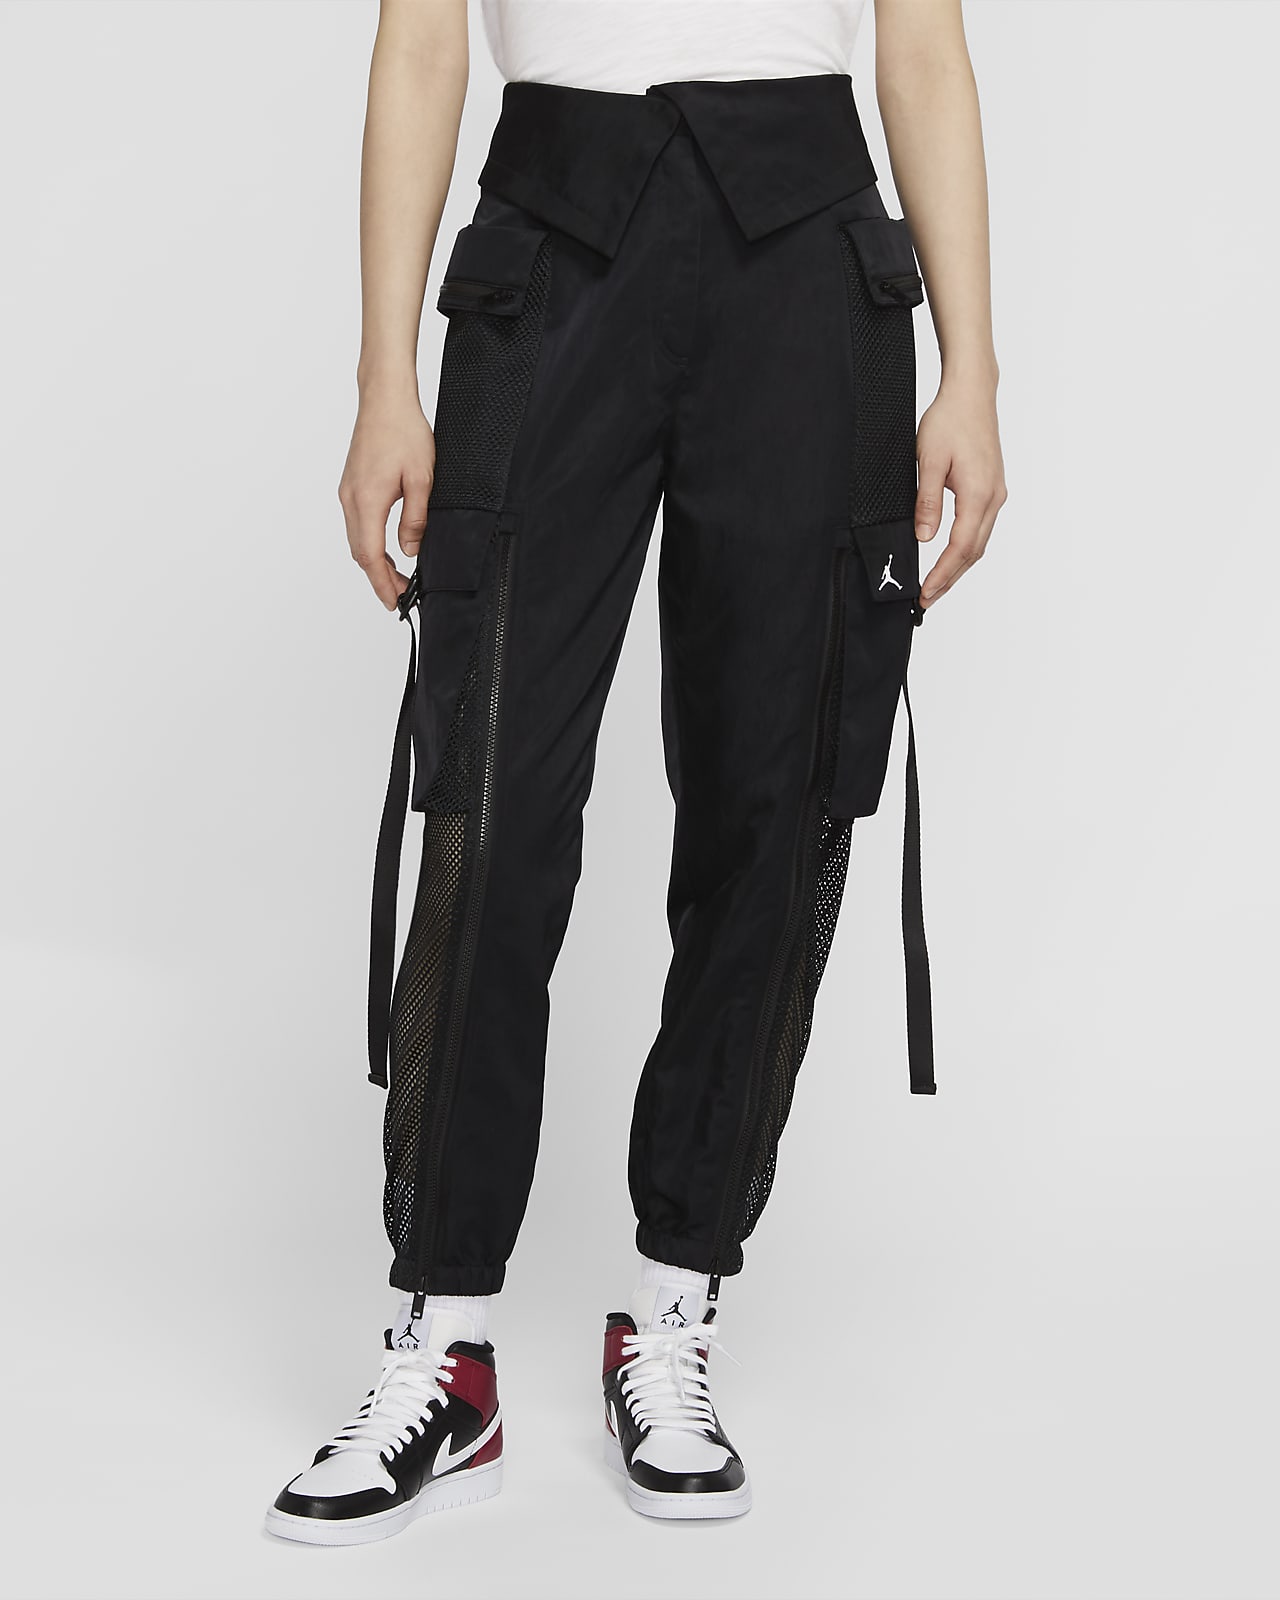 Pantalones para mujer Jordan Utility. Nike.com